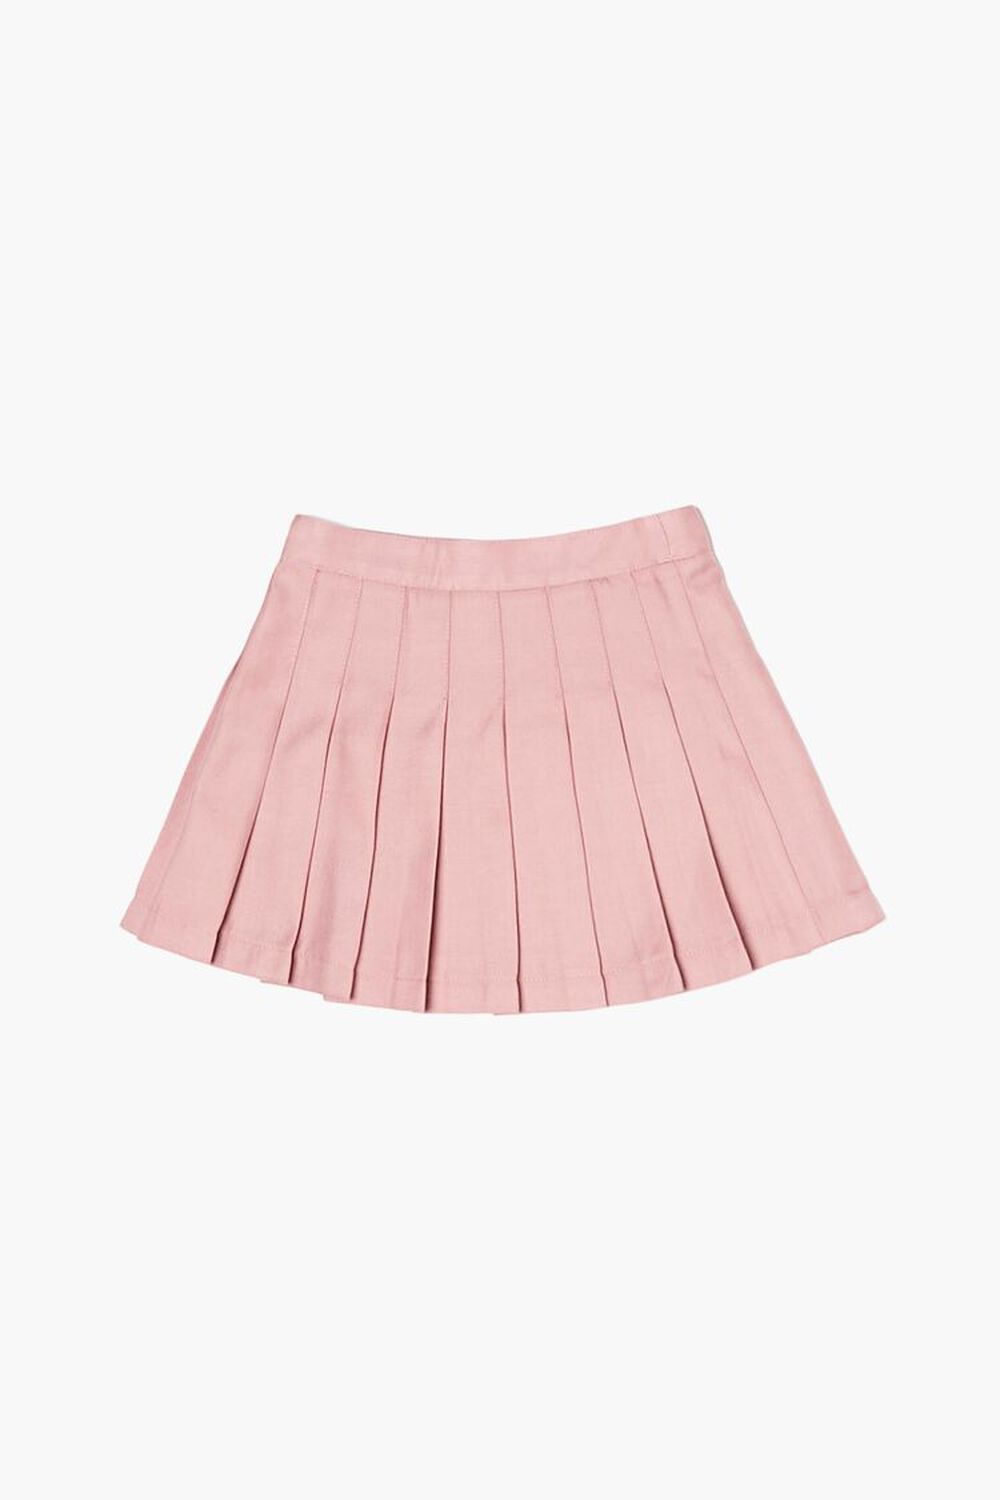 PINK Girls Plaid A-Line Skirt (Kids), image 2